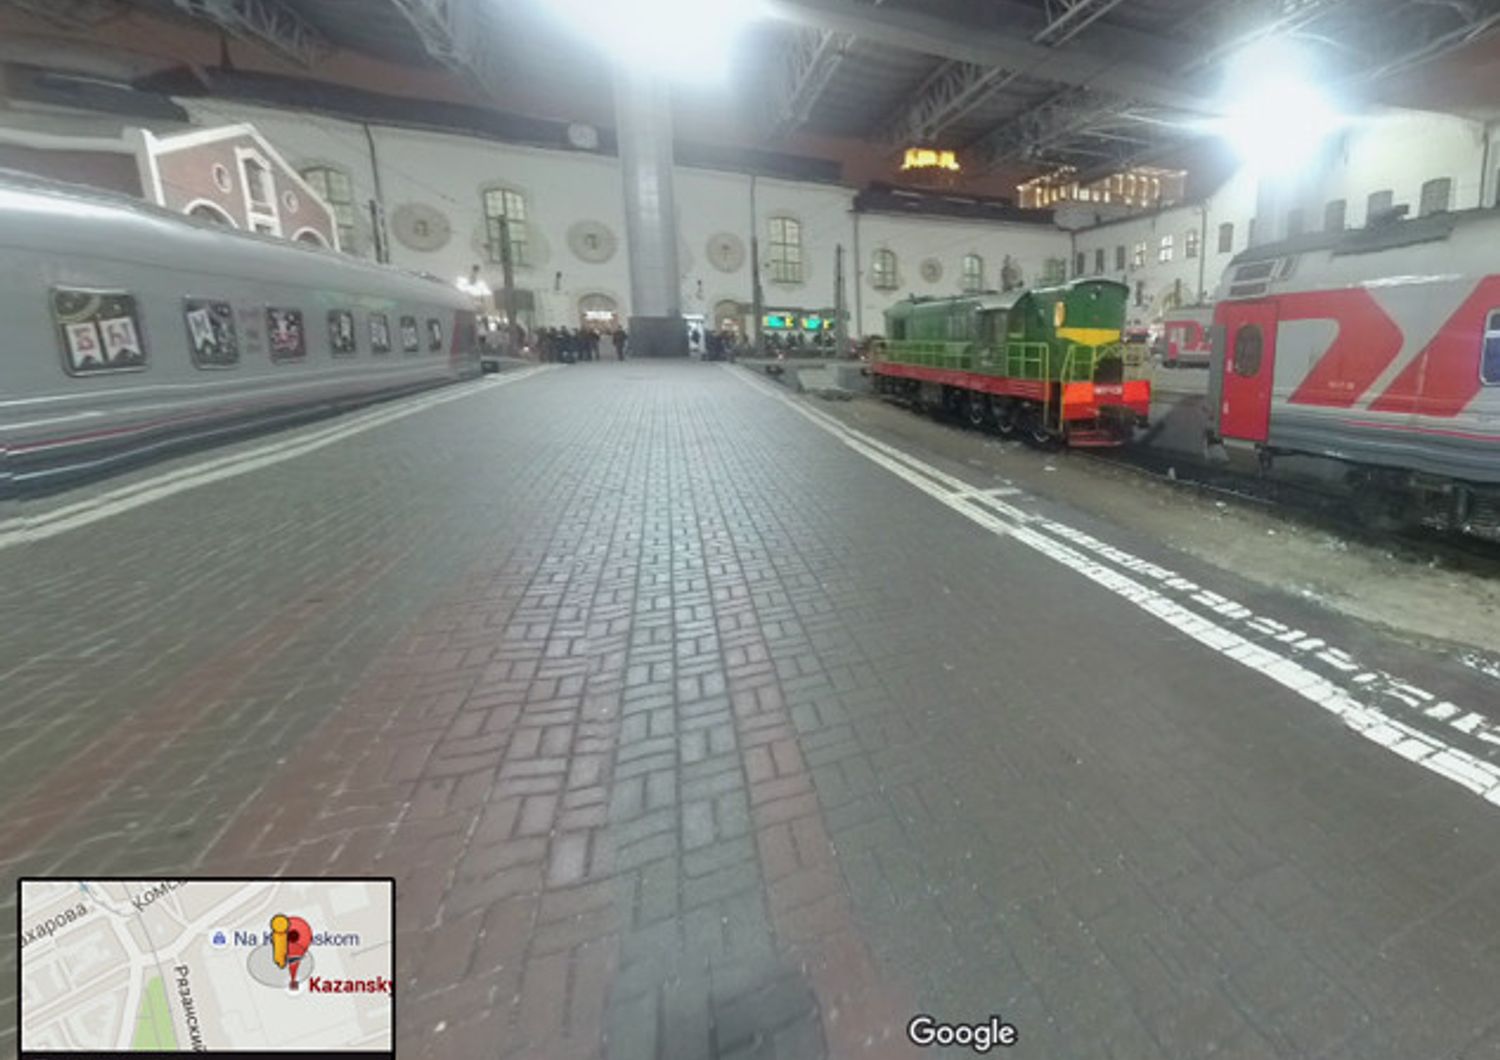 stazione Kazan Mosca (google)&nbsp;